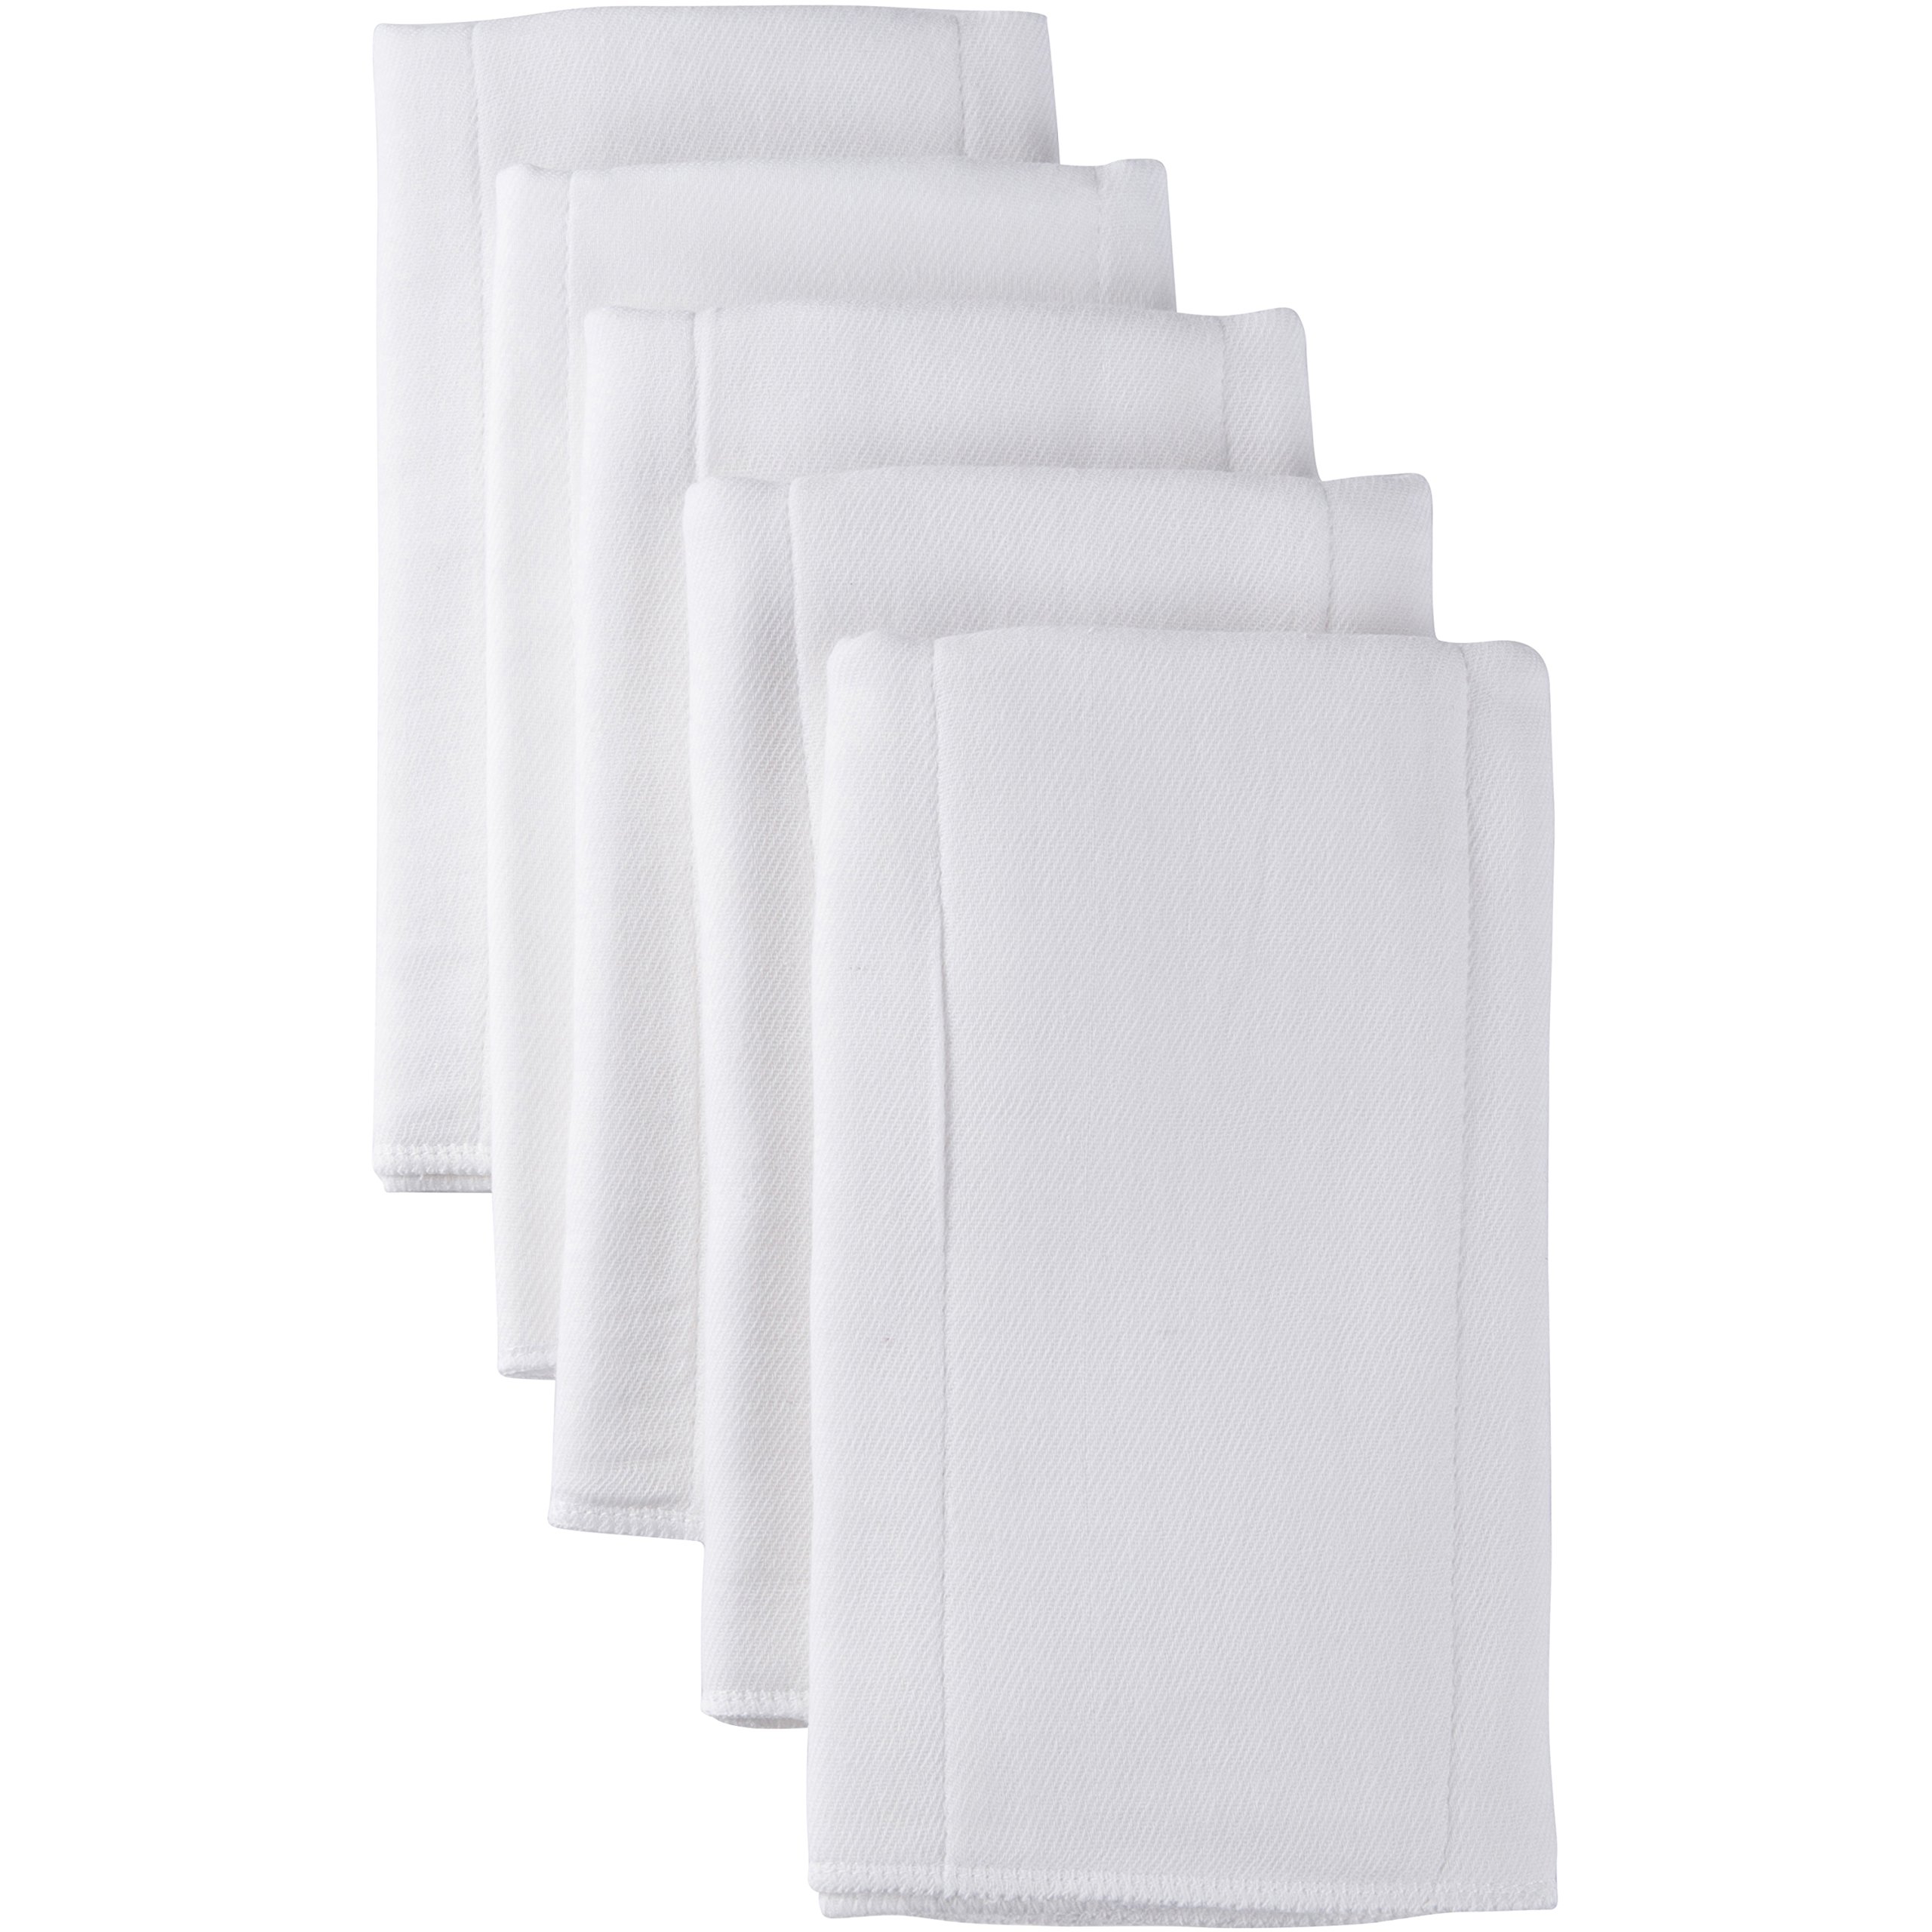 Gerber Unisex Baby Boys Girls Gauze Prefold Cloth Diapers Multipack White 5 Pack